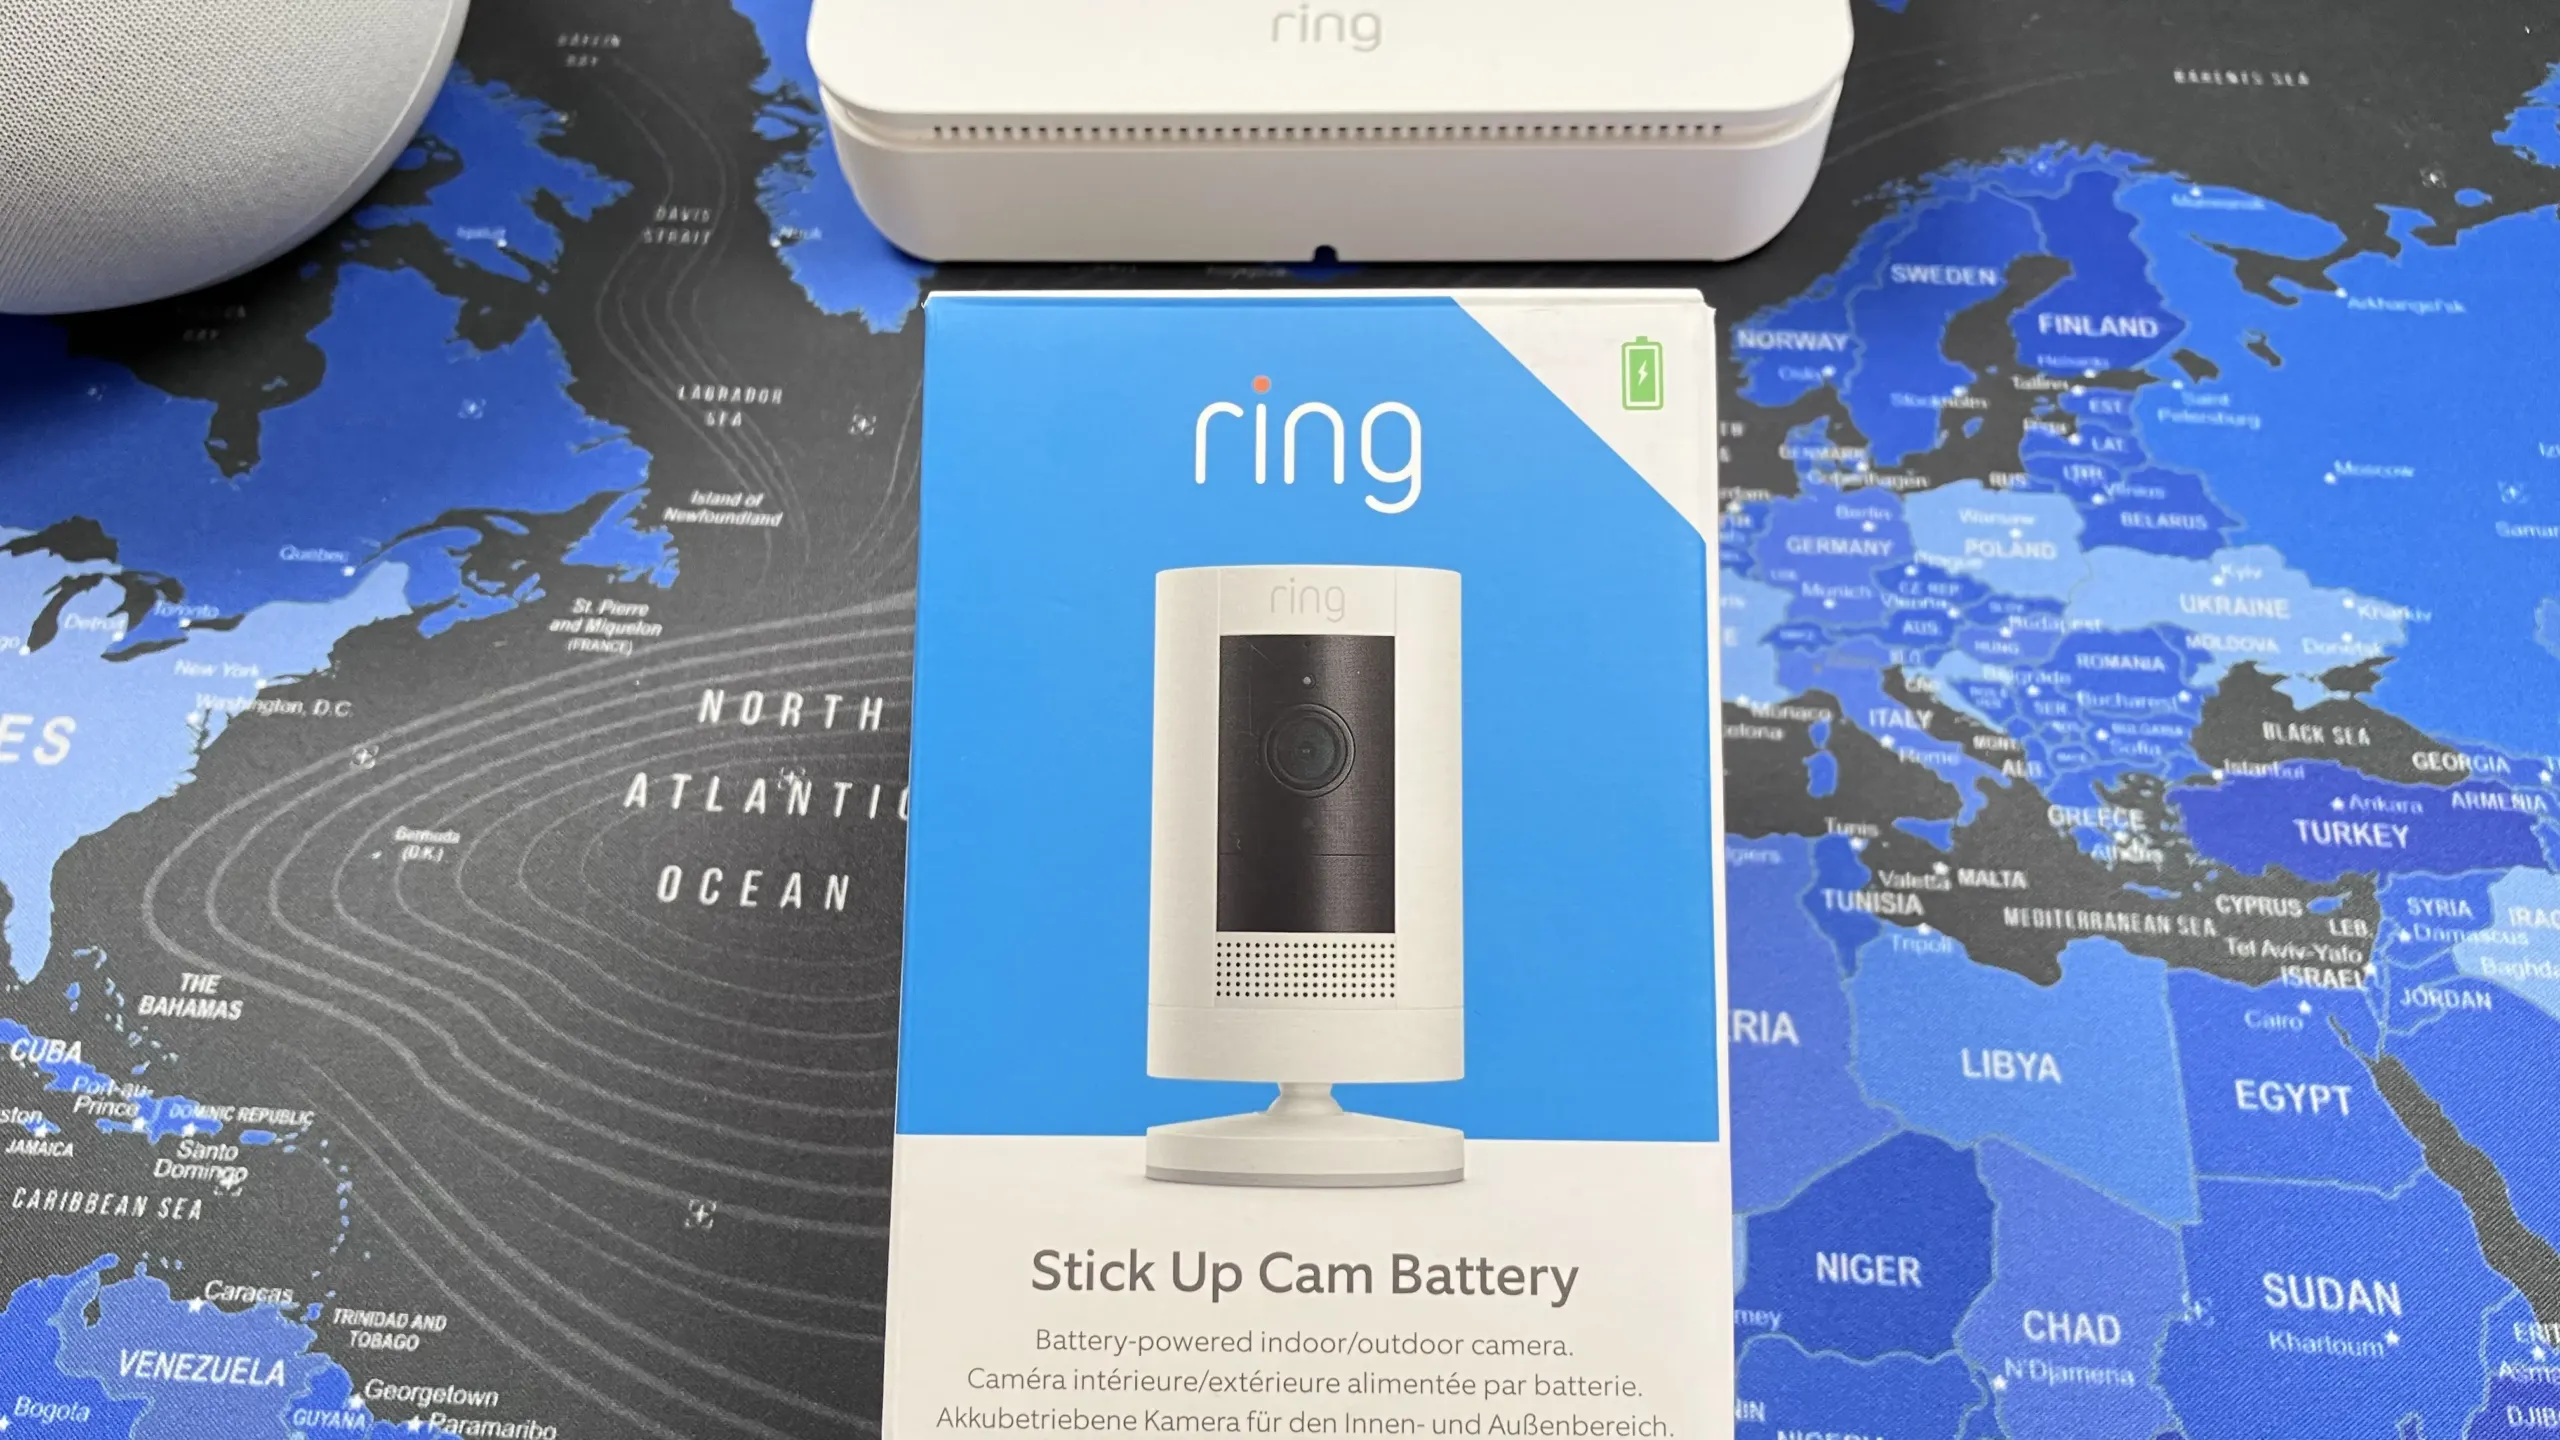 Ring Stick Up Cam Battery de Amazon